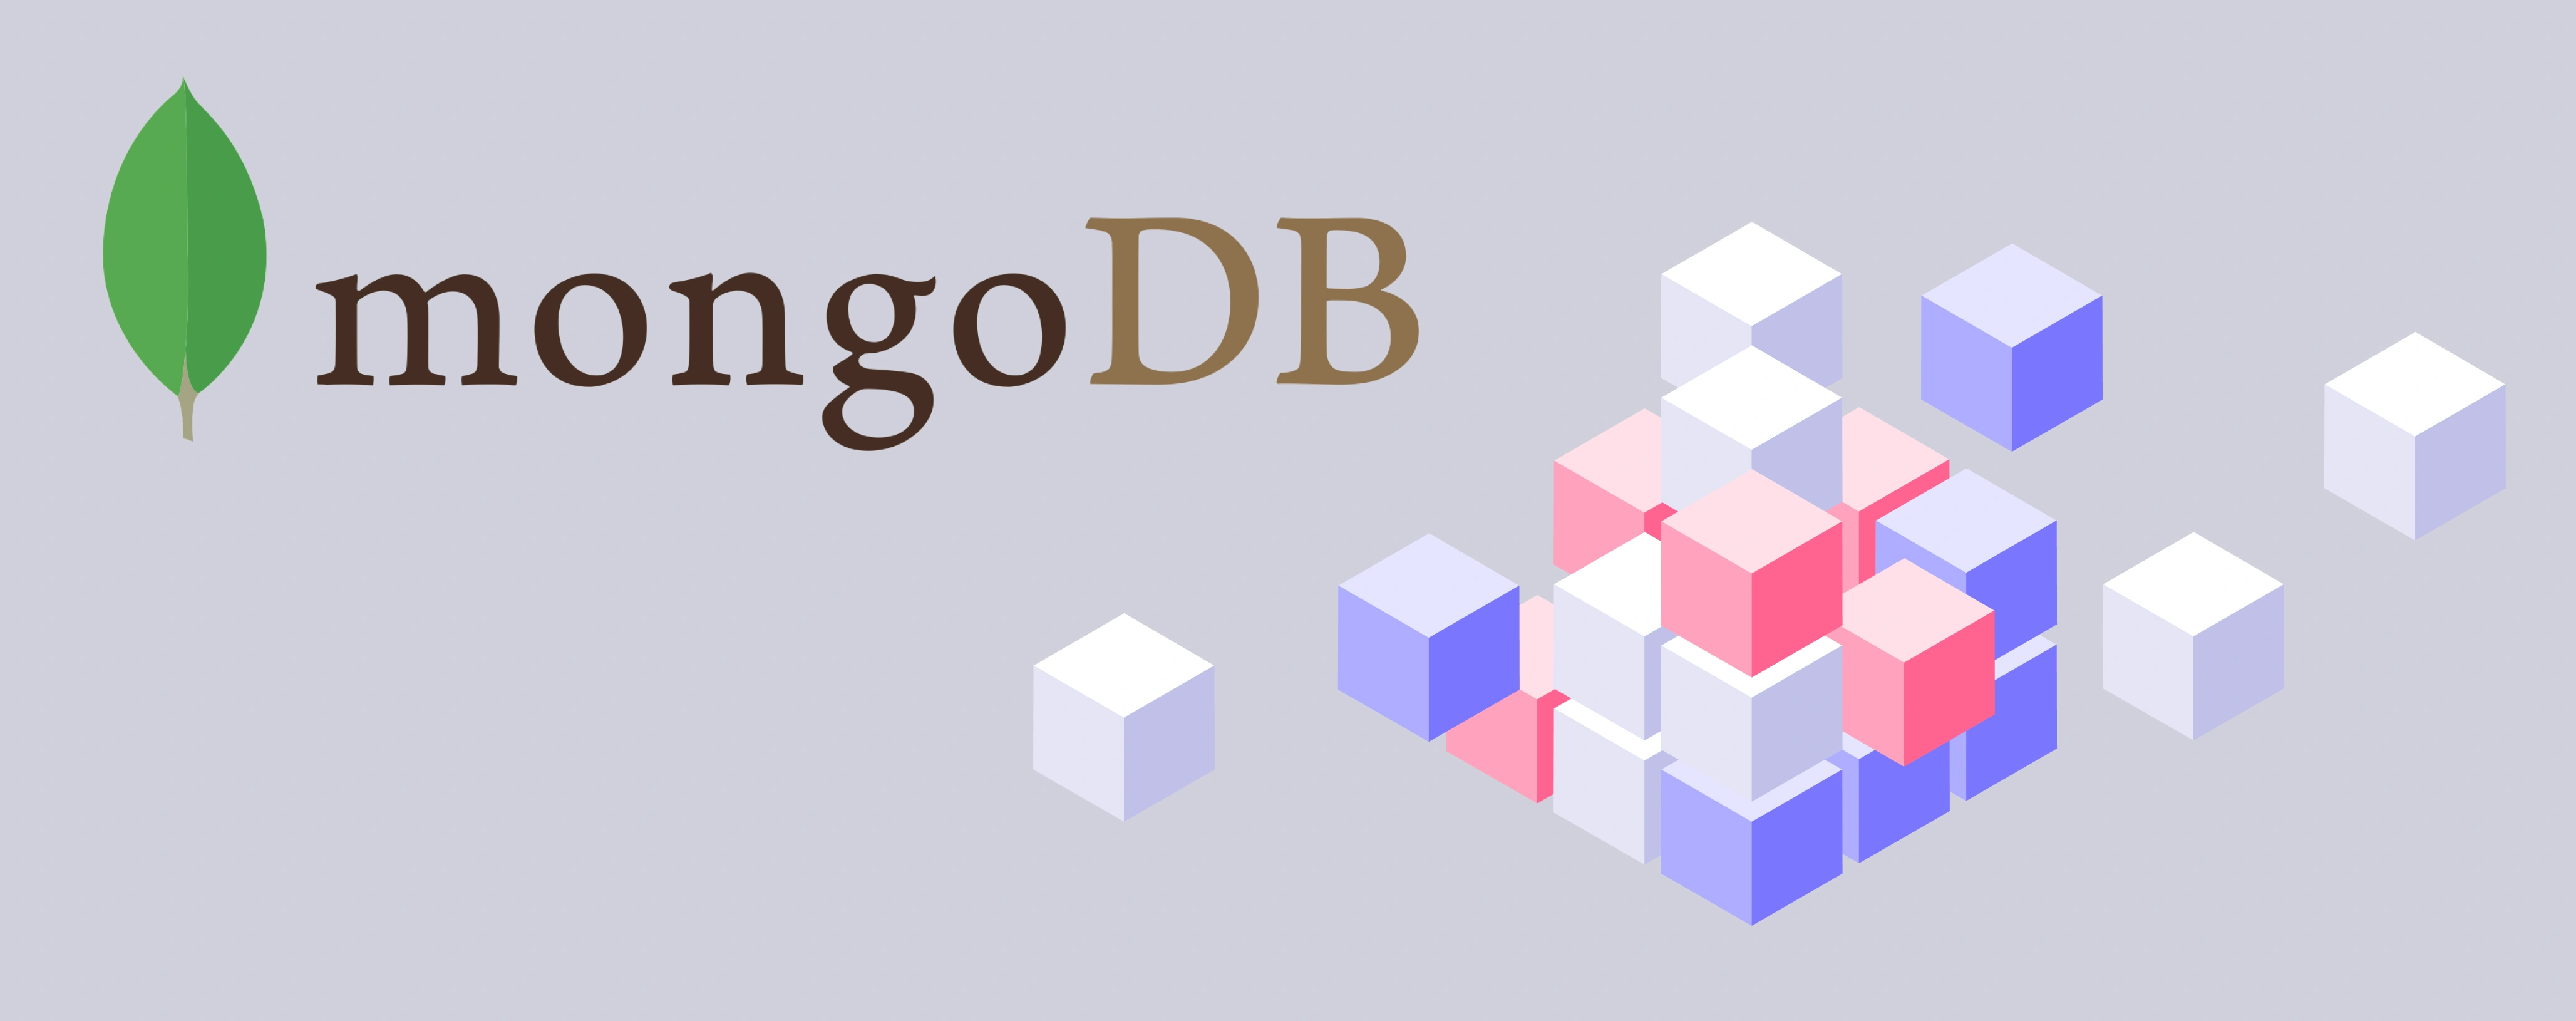 Building MongoDB Dashboard using Node.js | Cube.js Blog